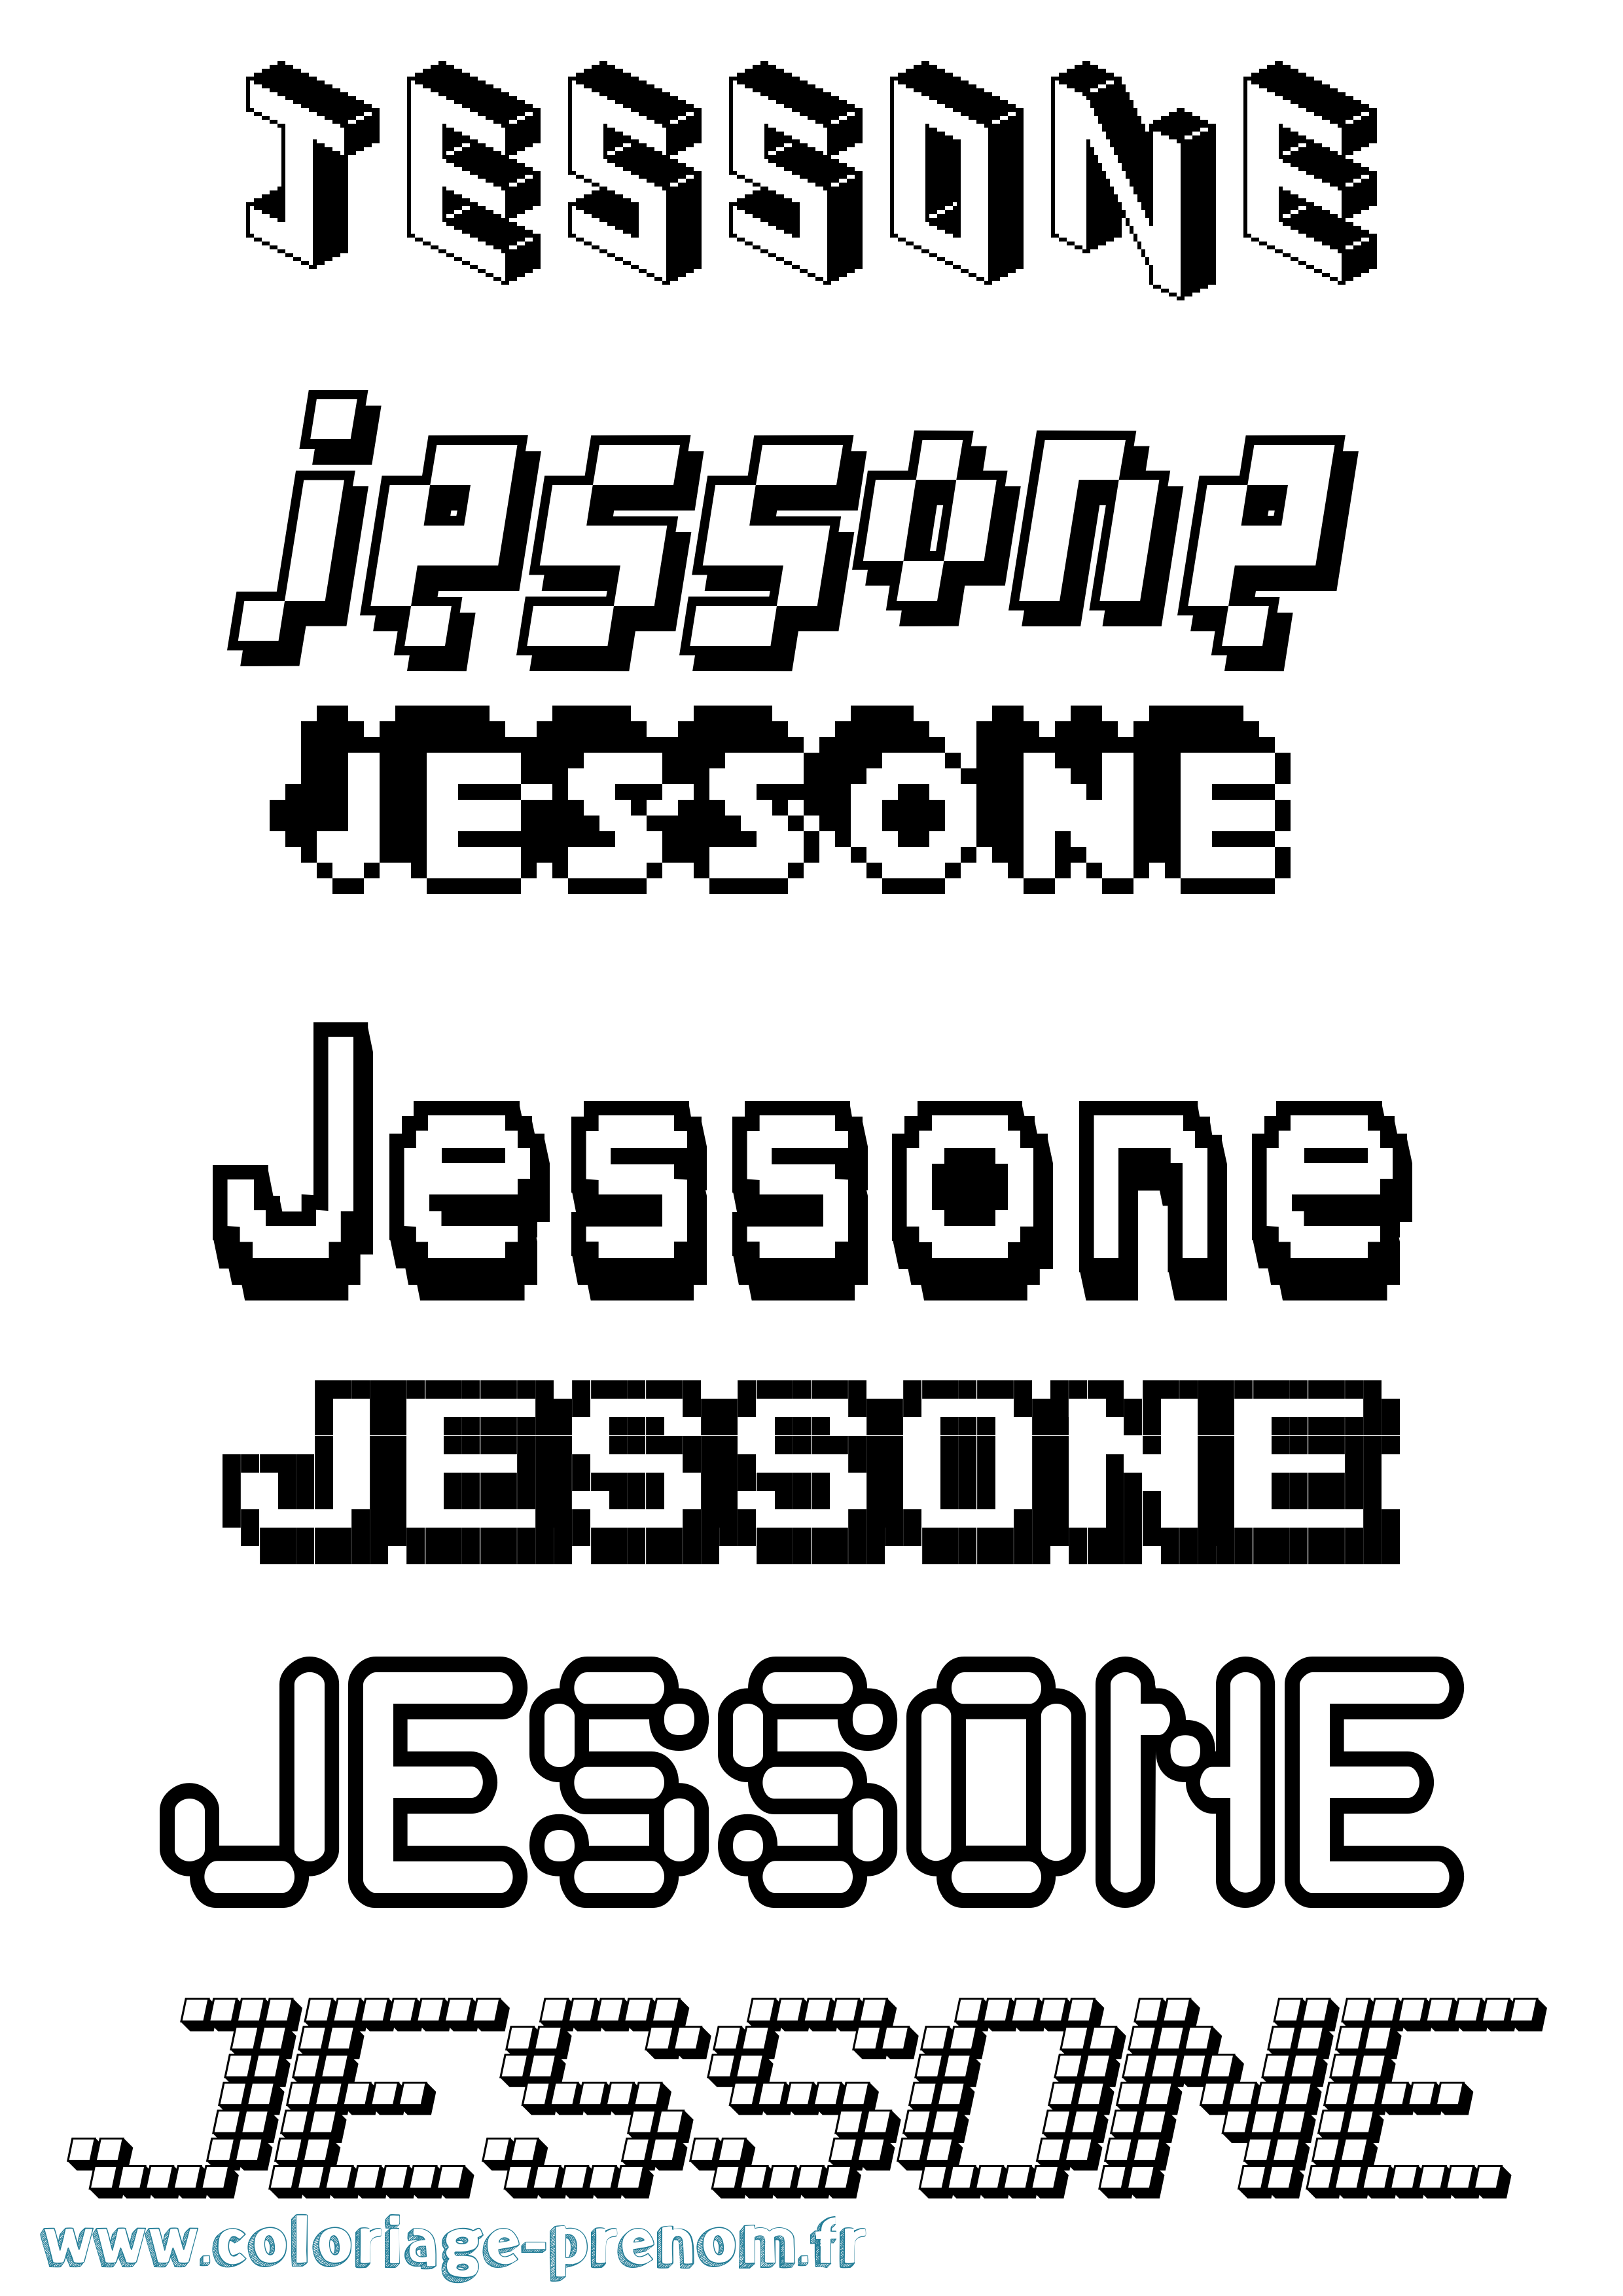 Coloriage prénom Jessone Pixel